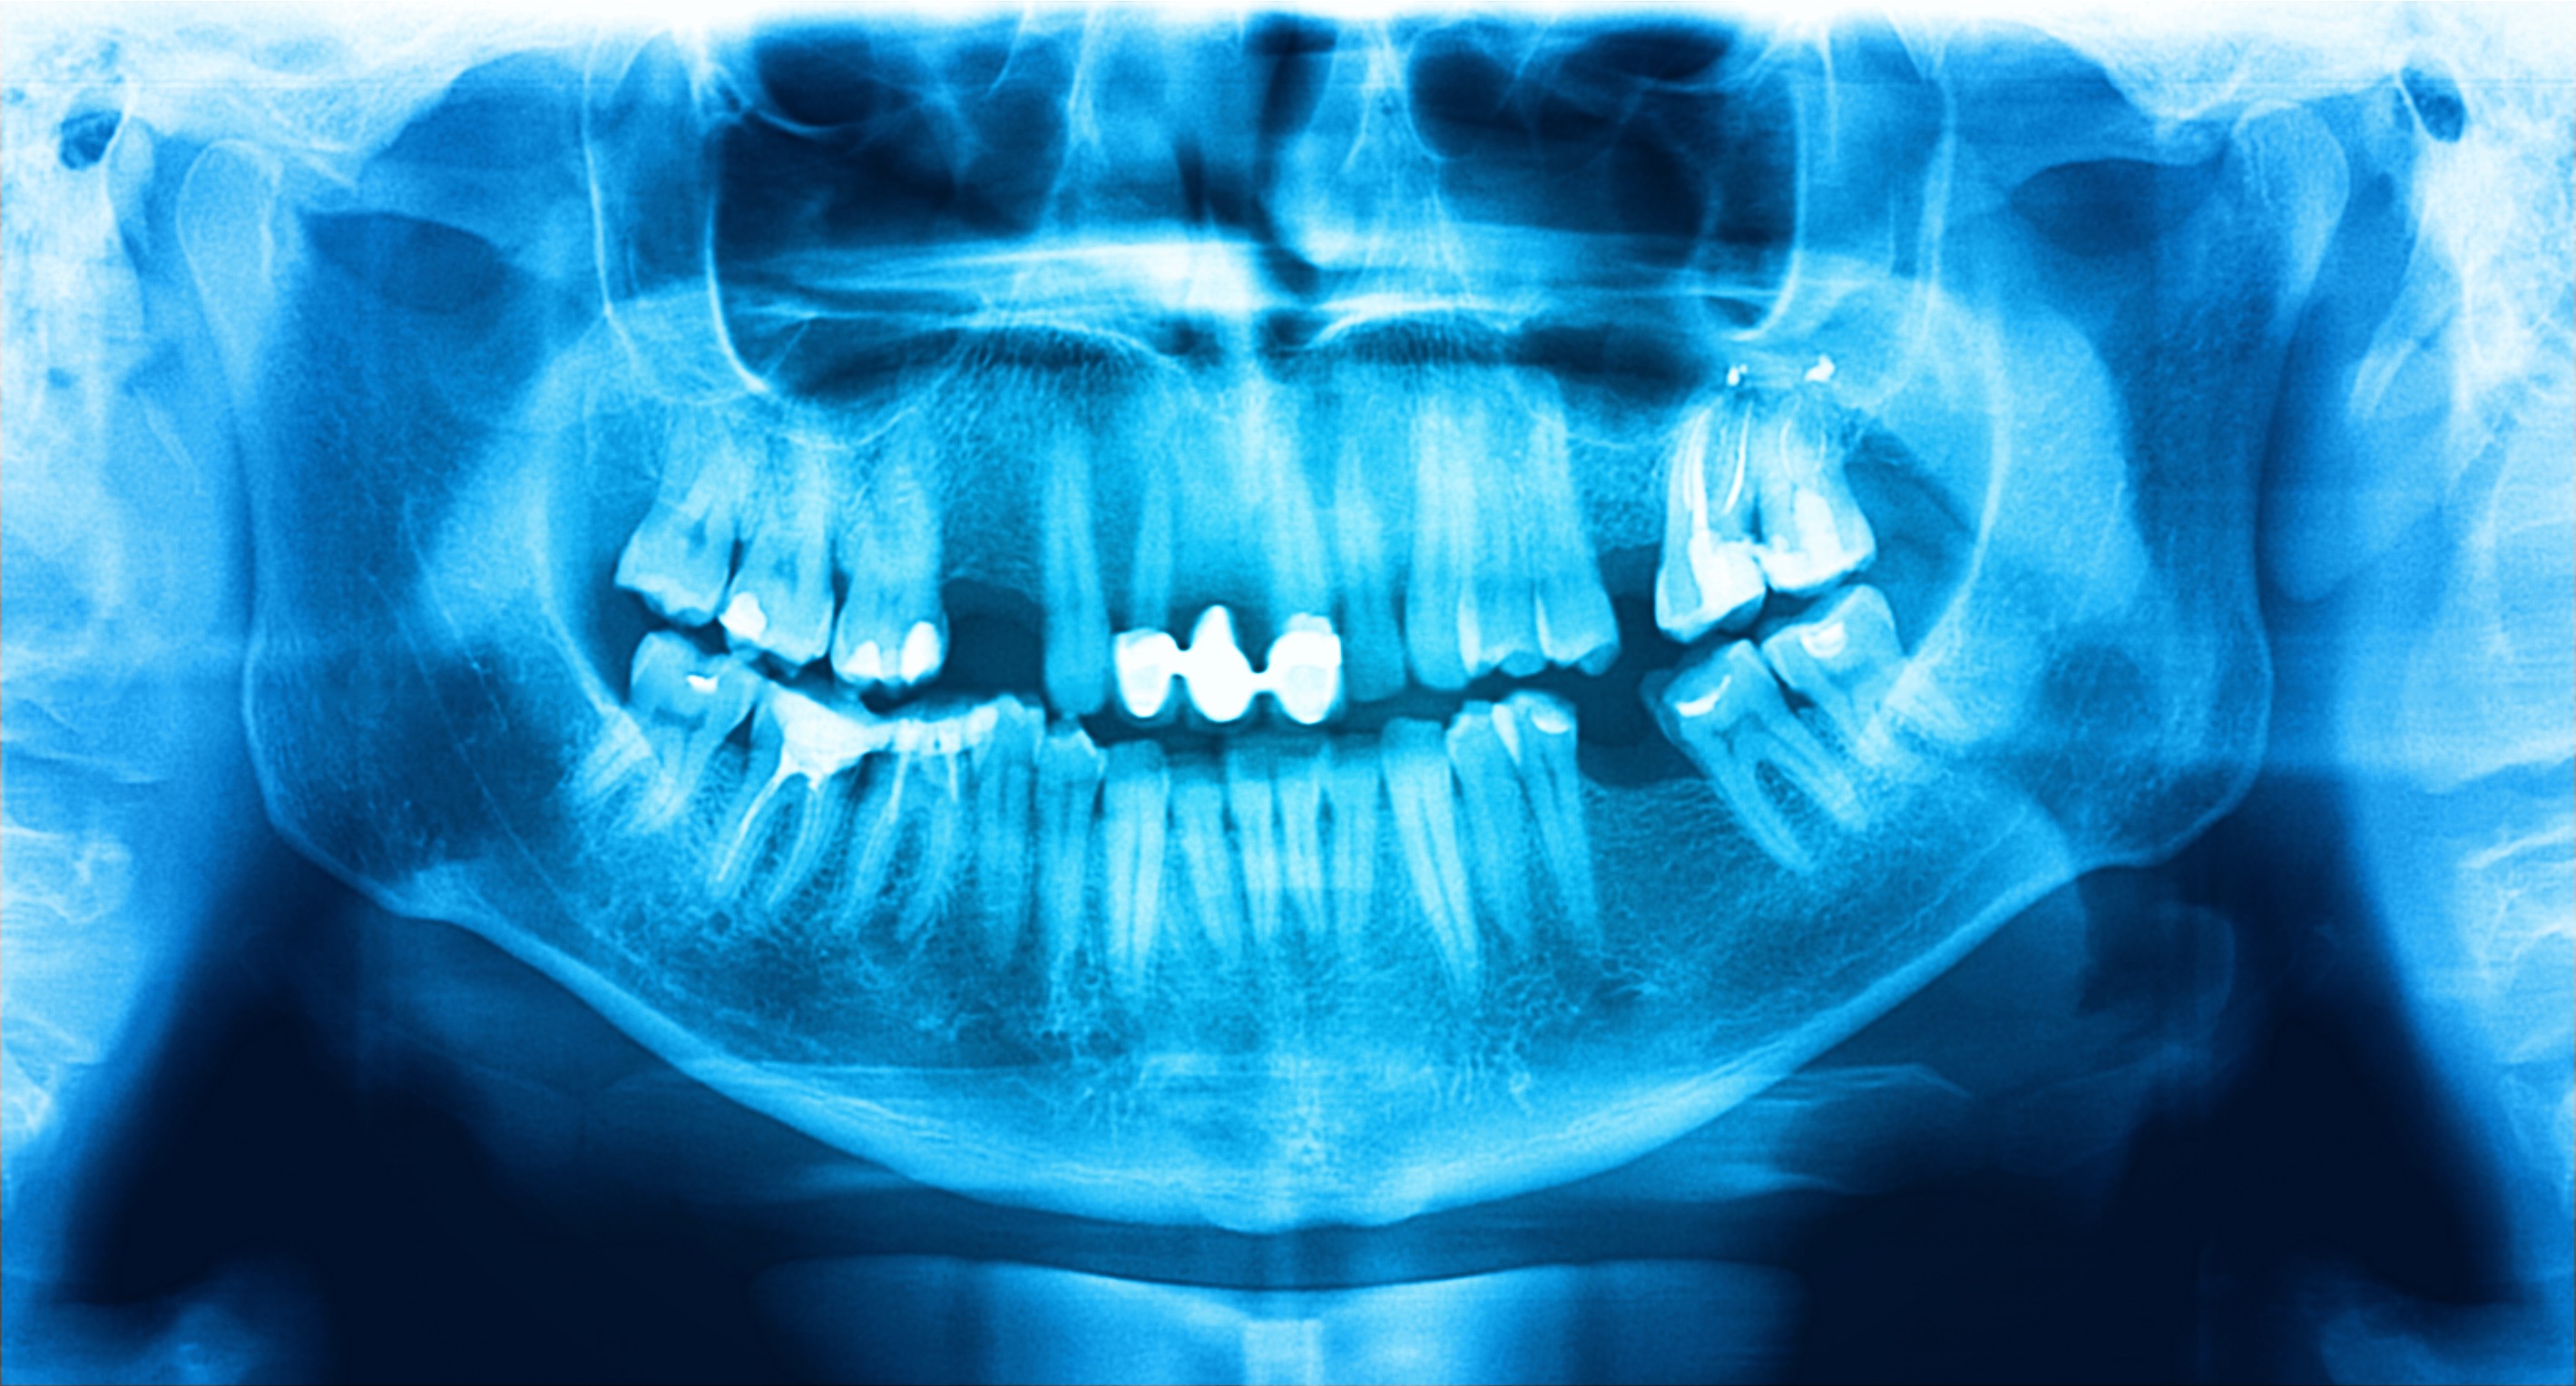 dental panoramic x-ray